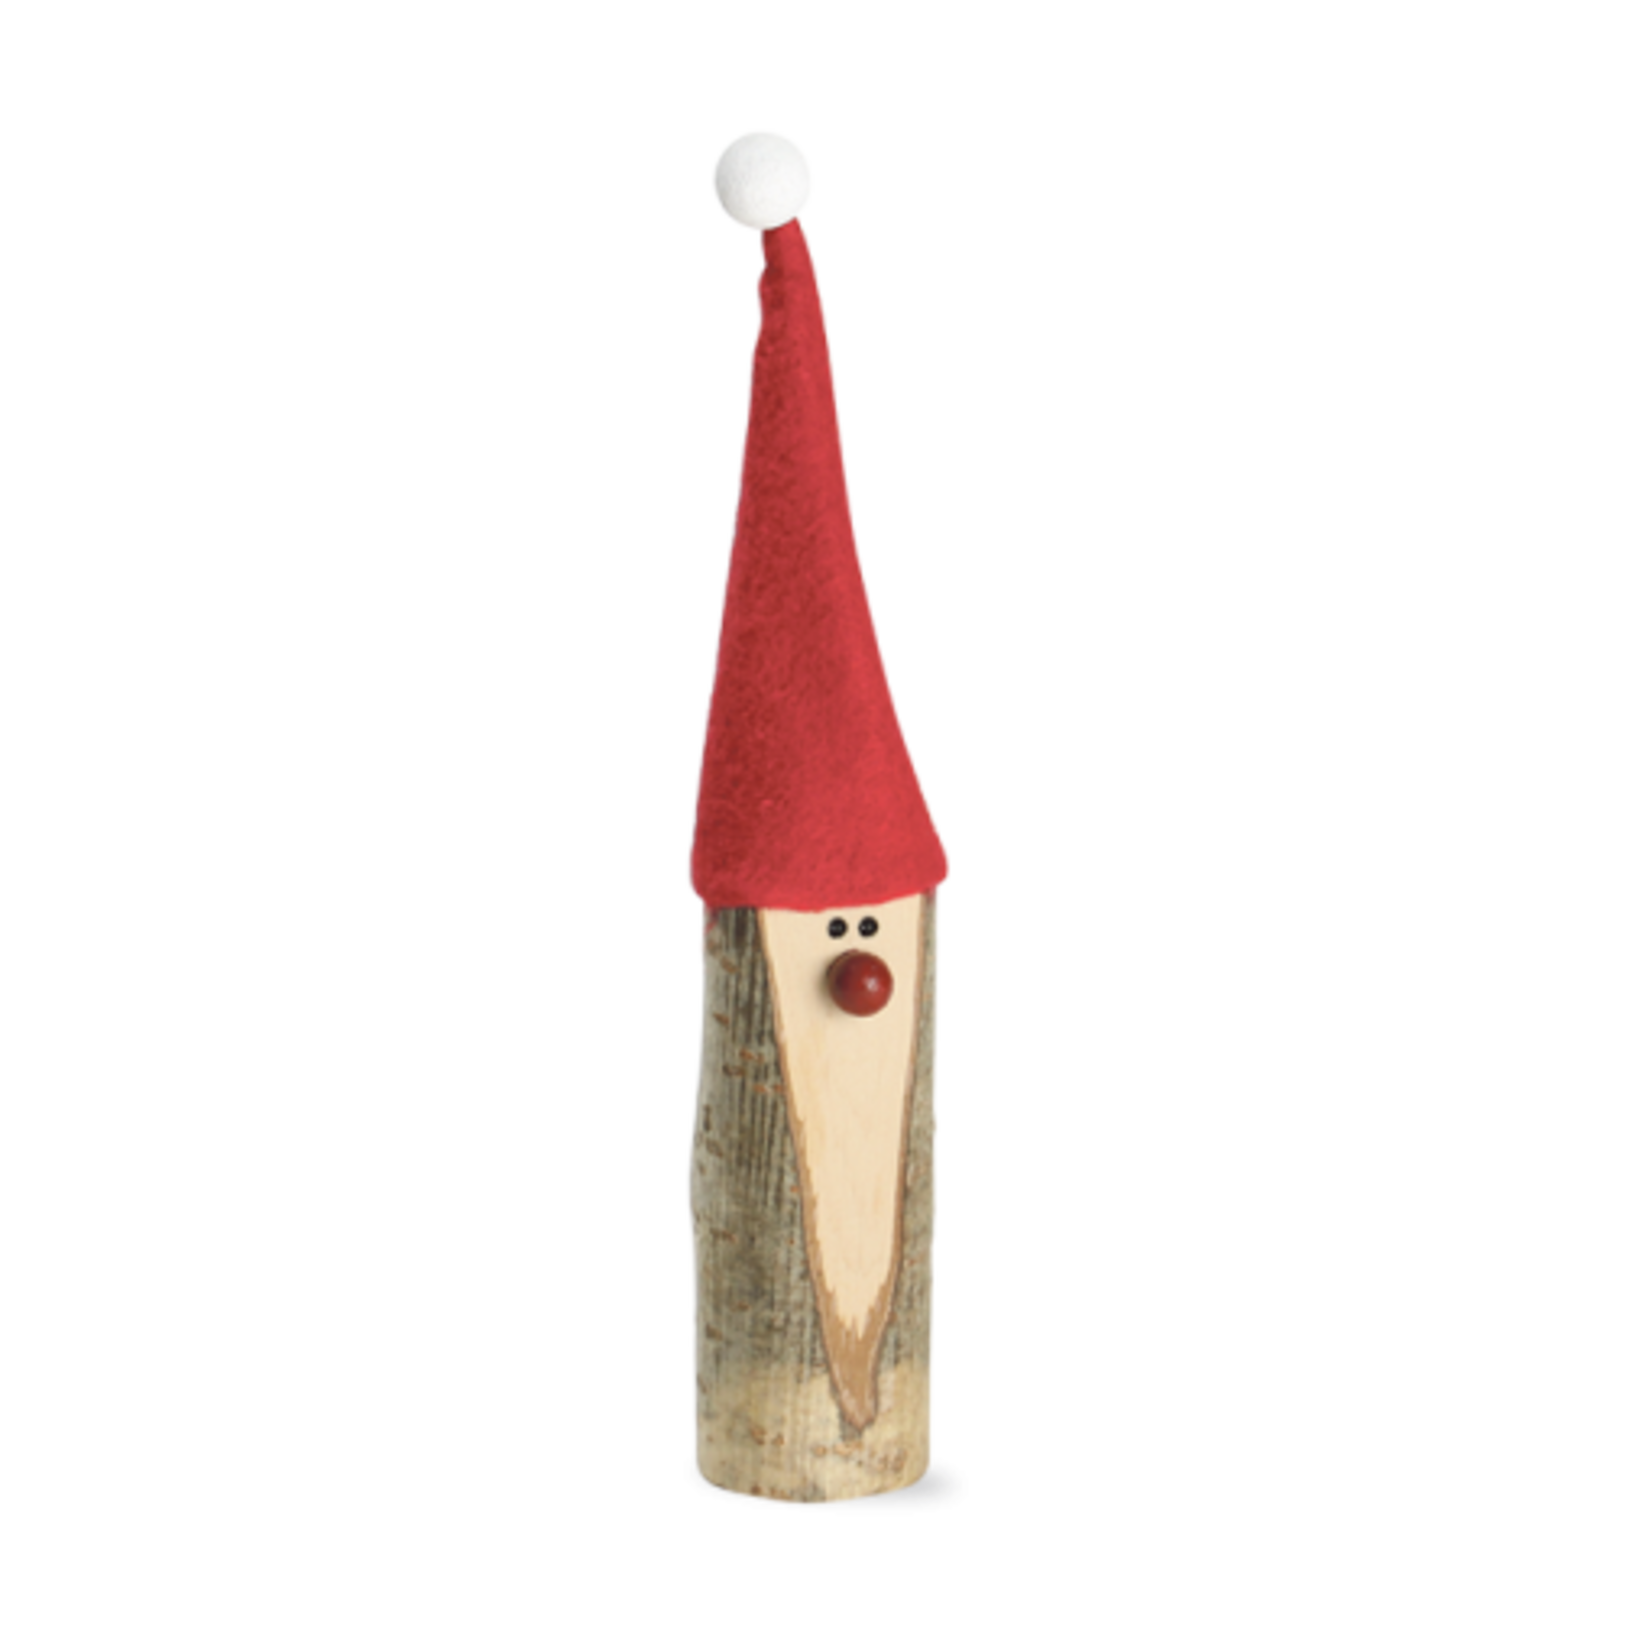 Waldfabrik Wooden Santa Claus 15 cm